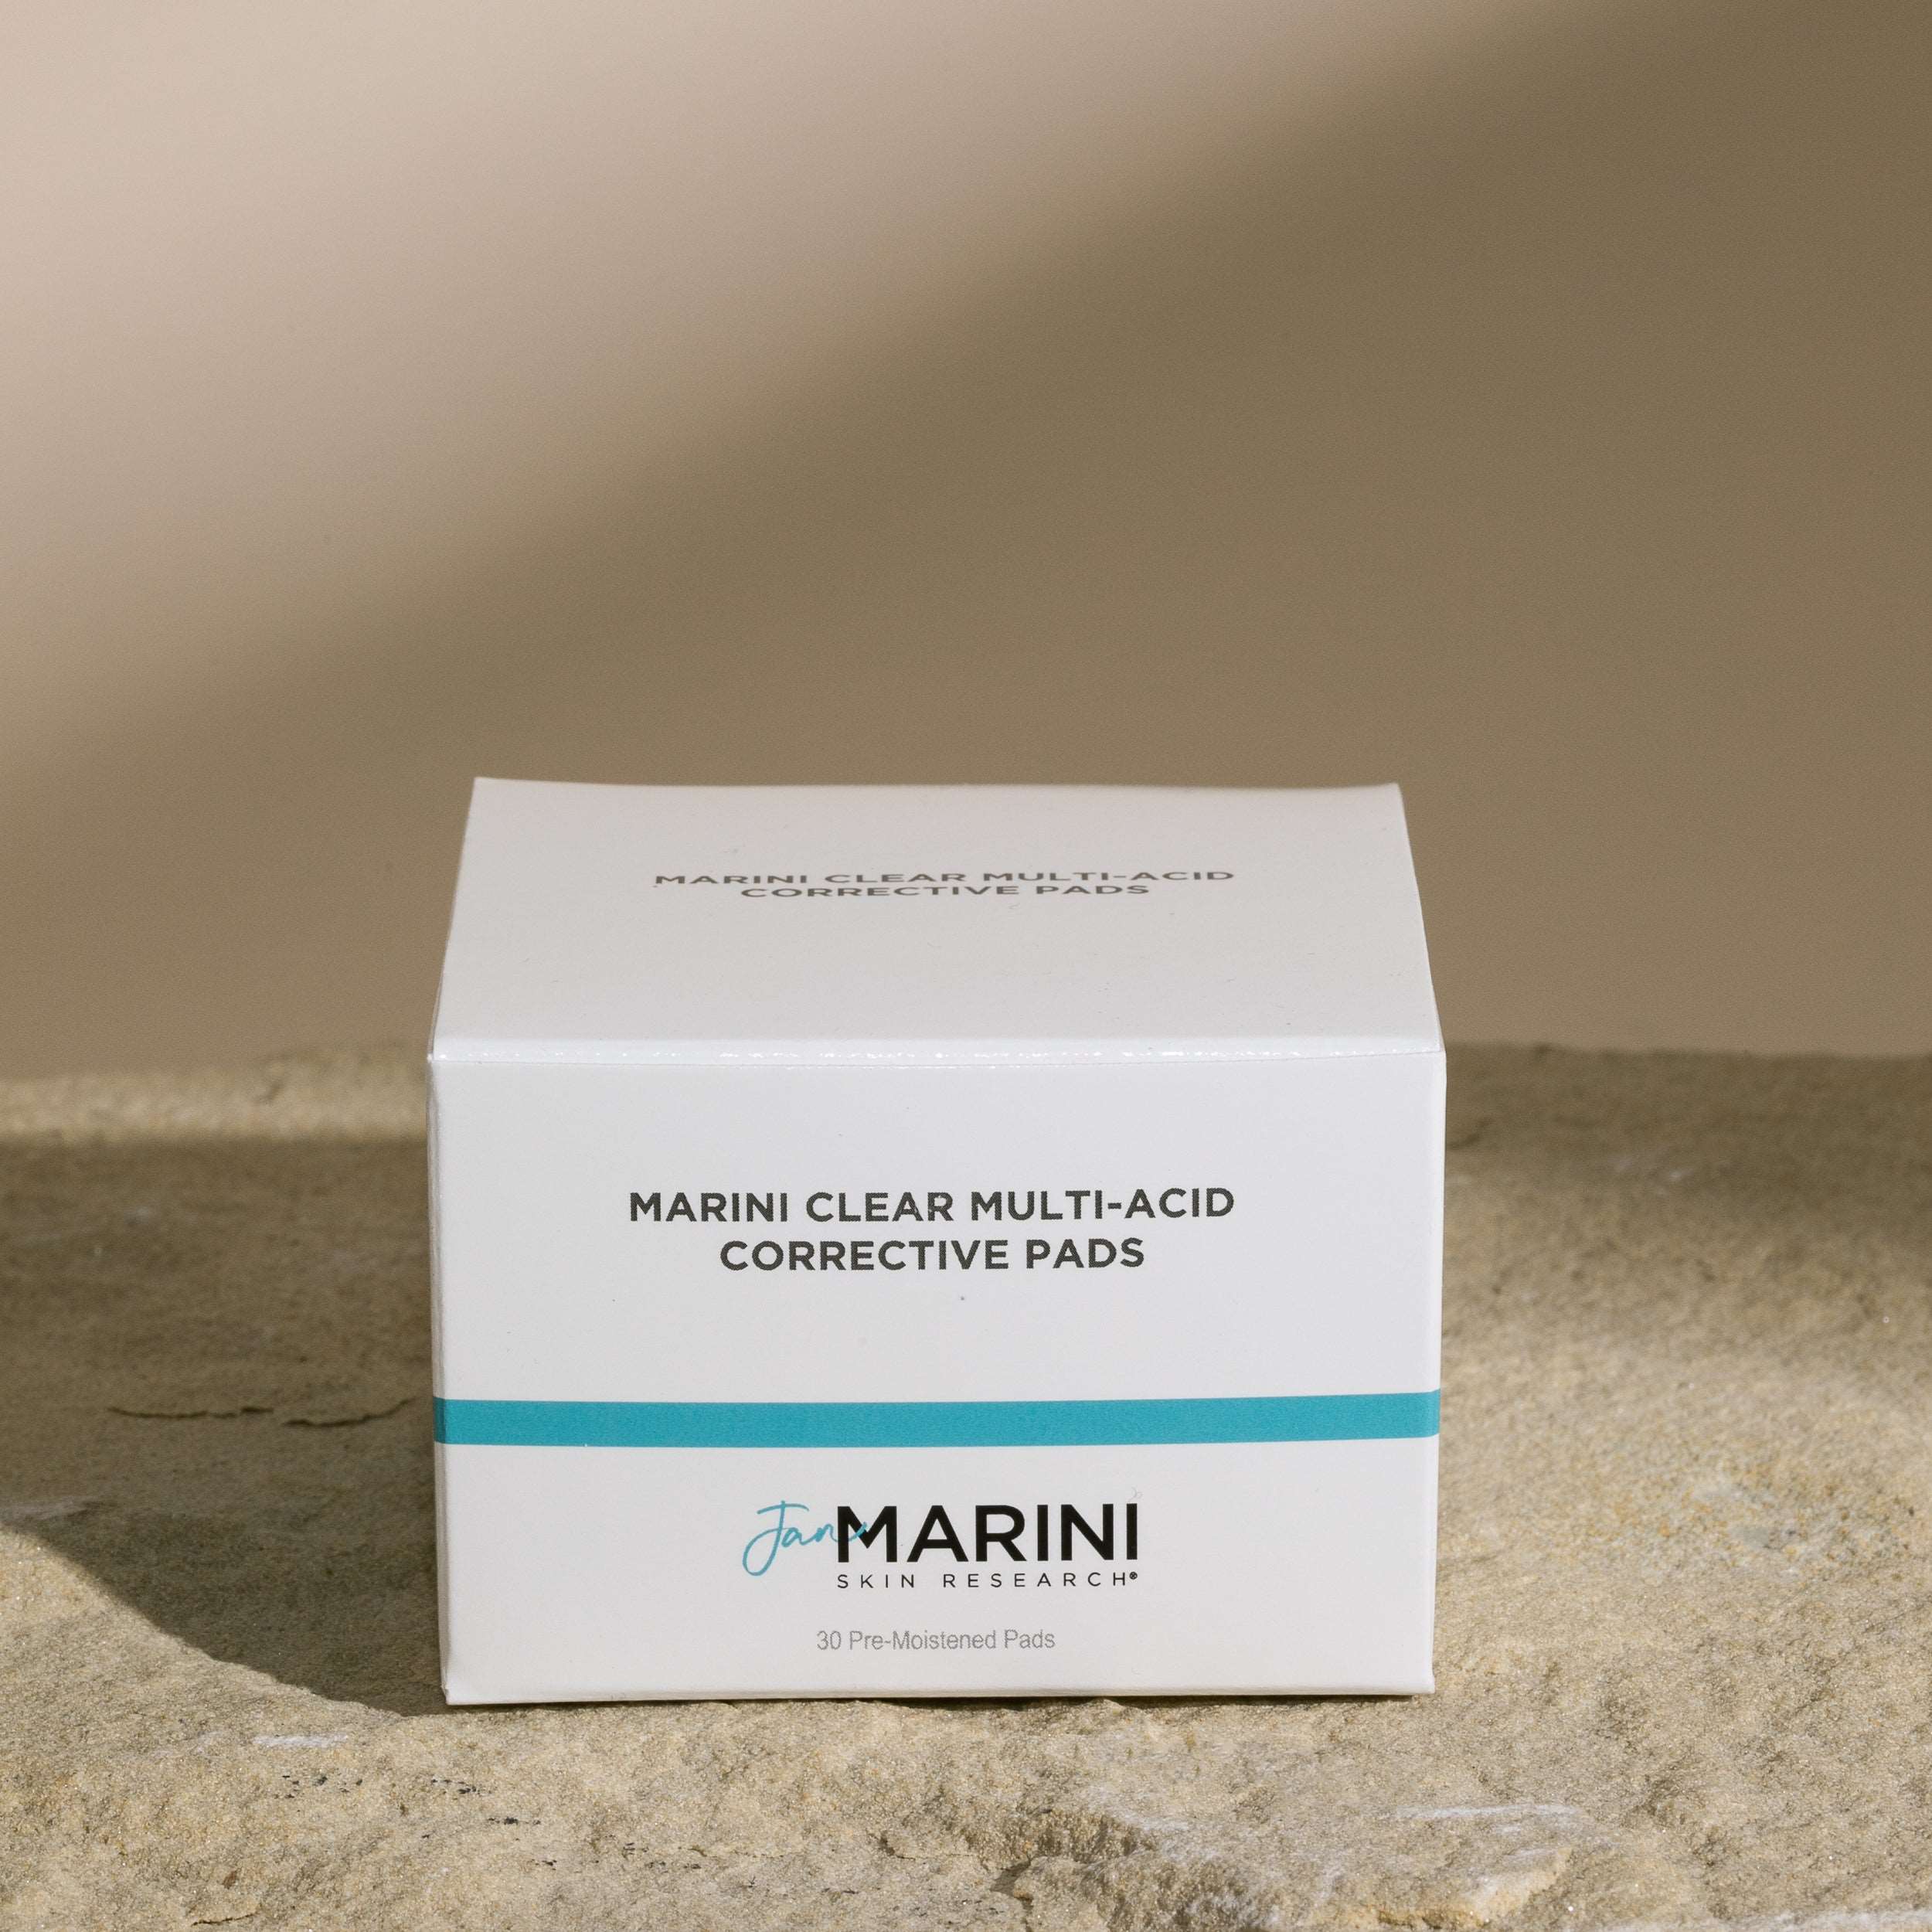 Marini Clear Multi-Acid Corrective Pads Jan Marini